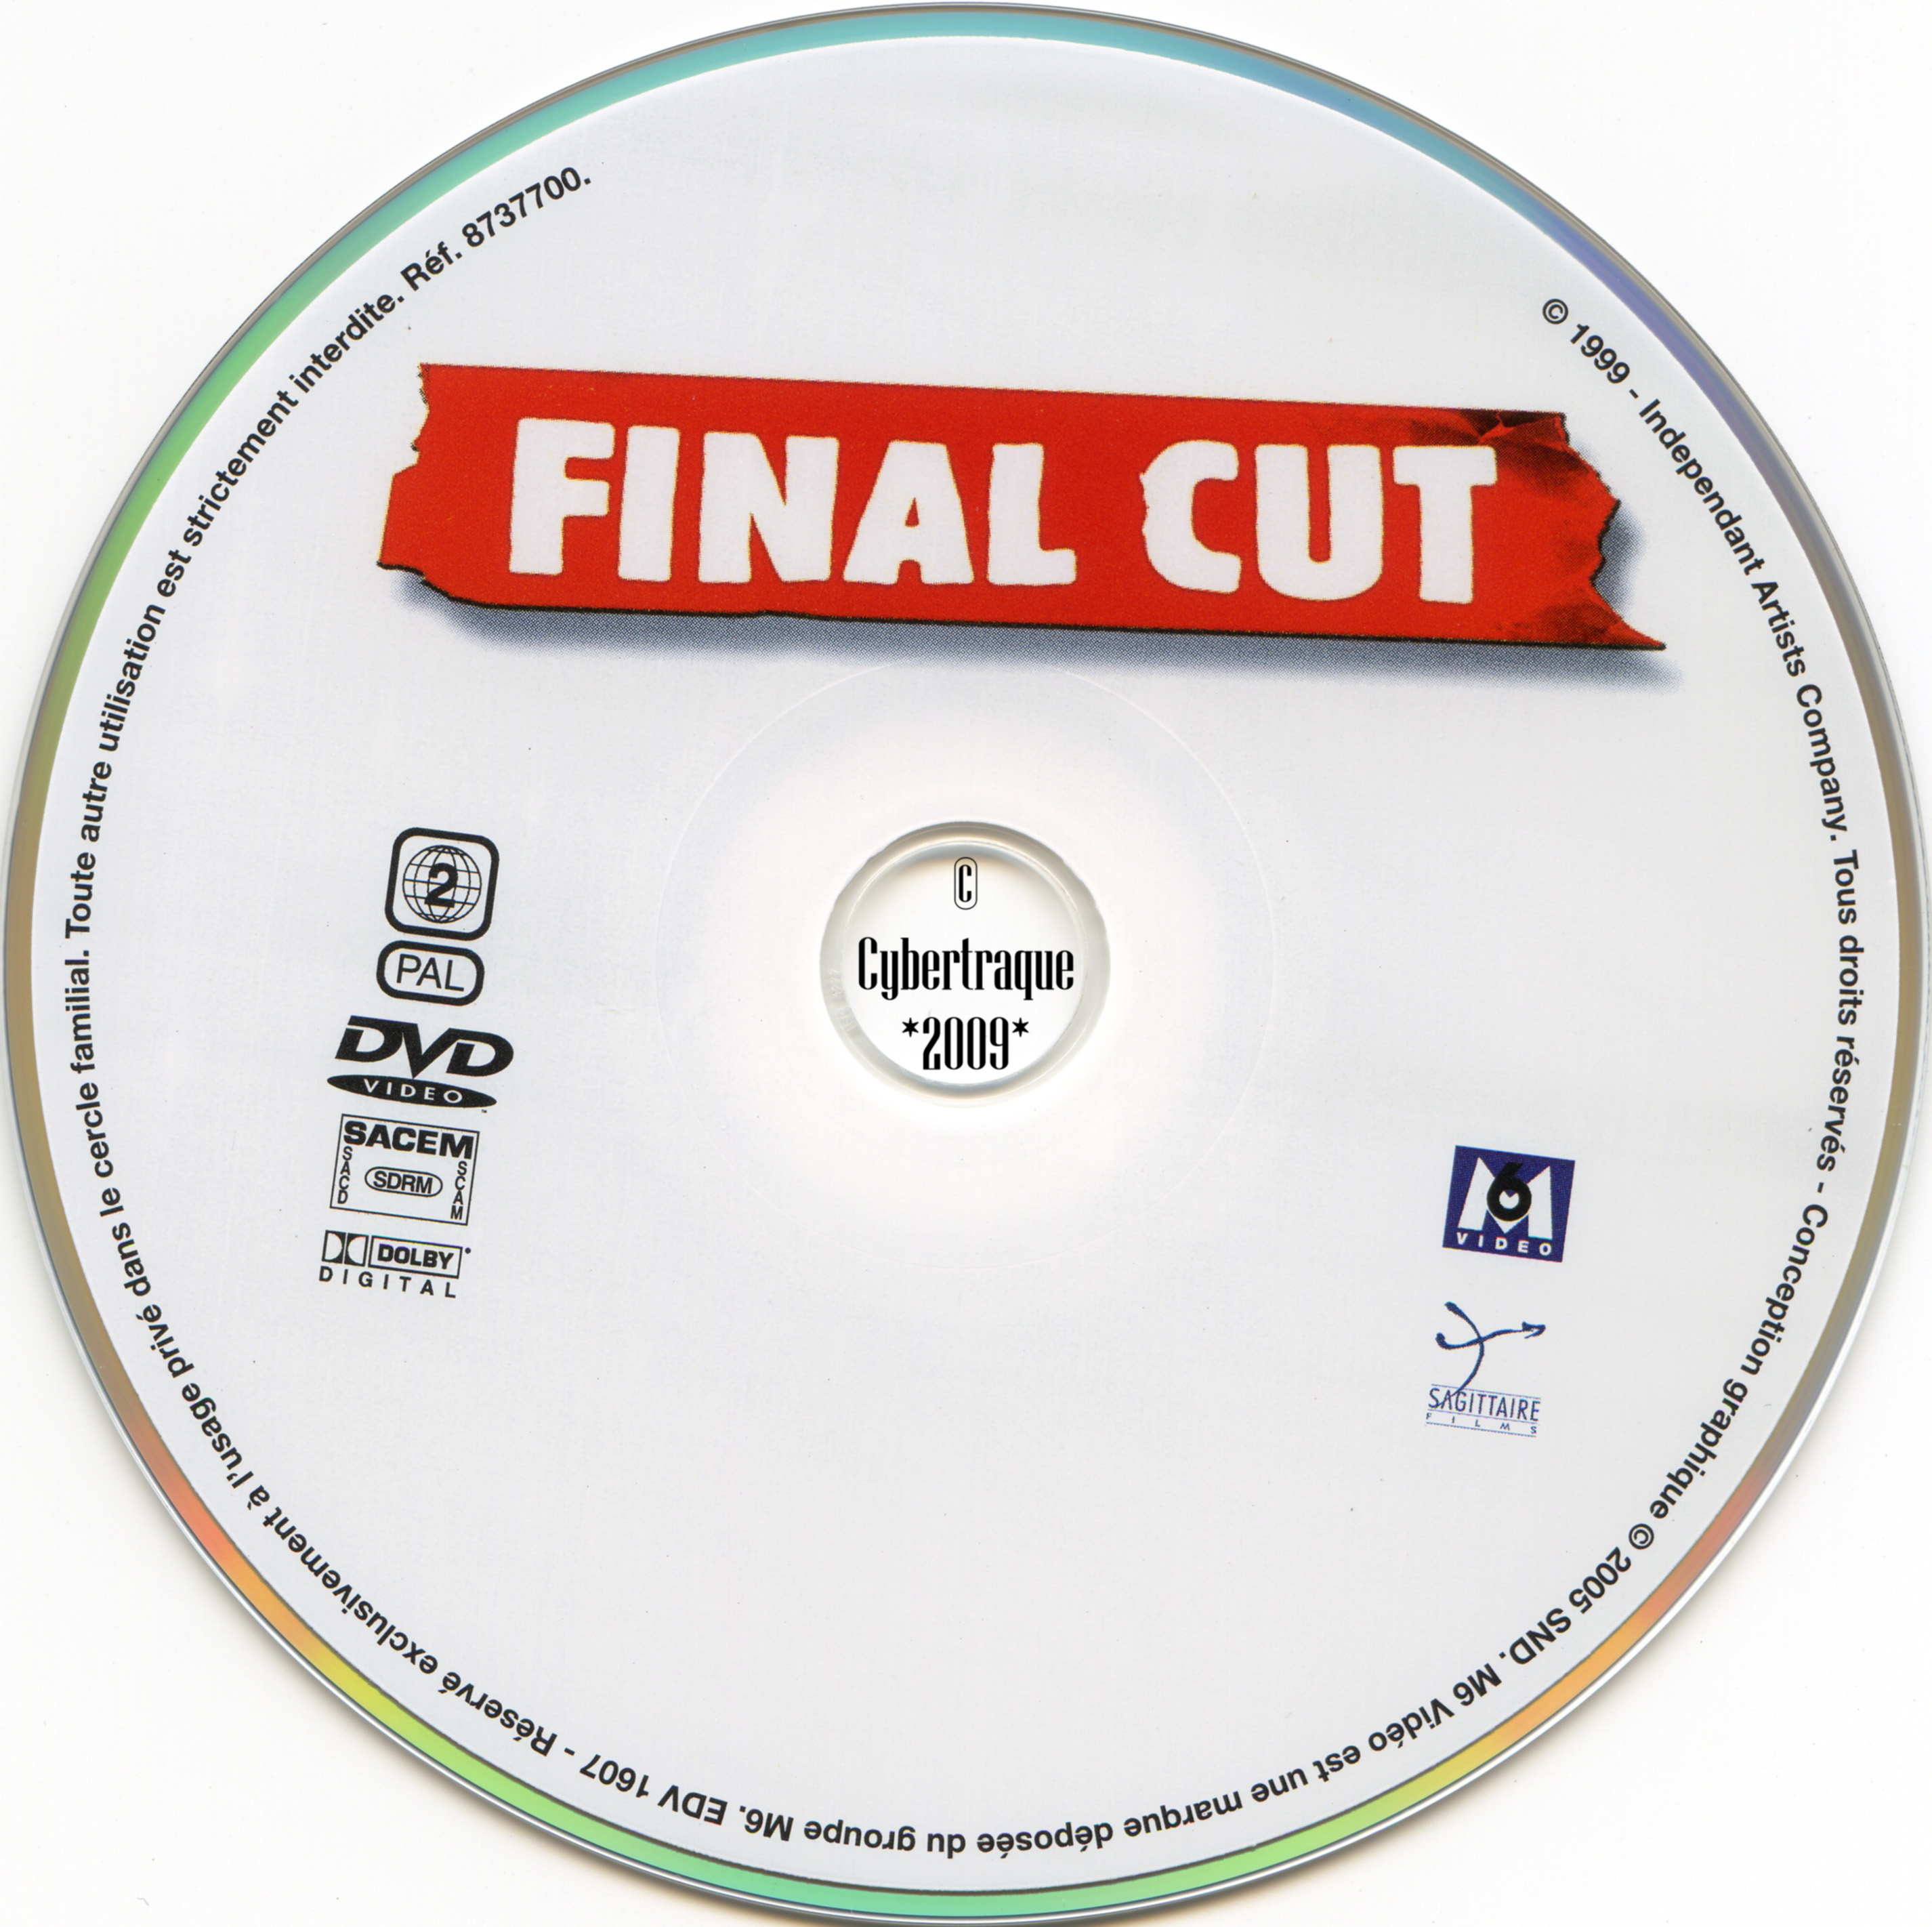 Final cut (2000)